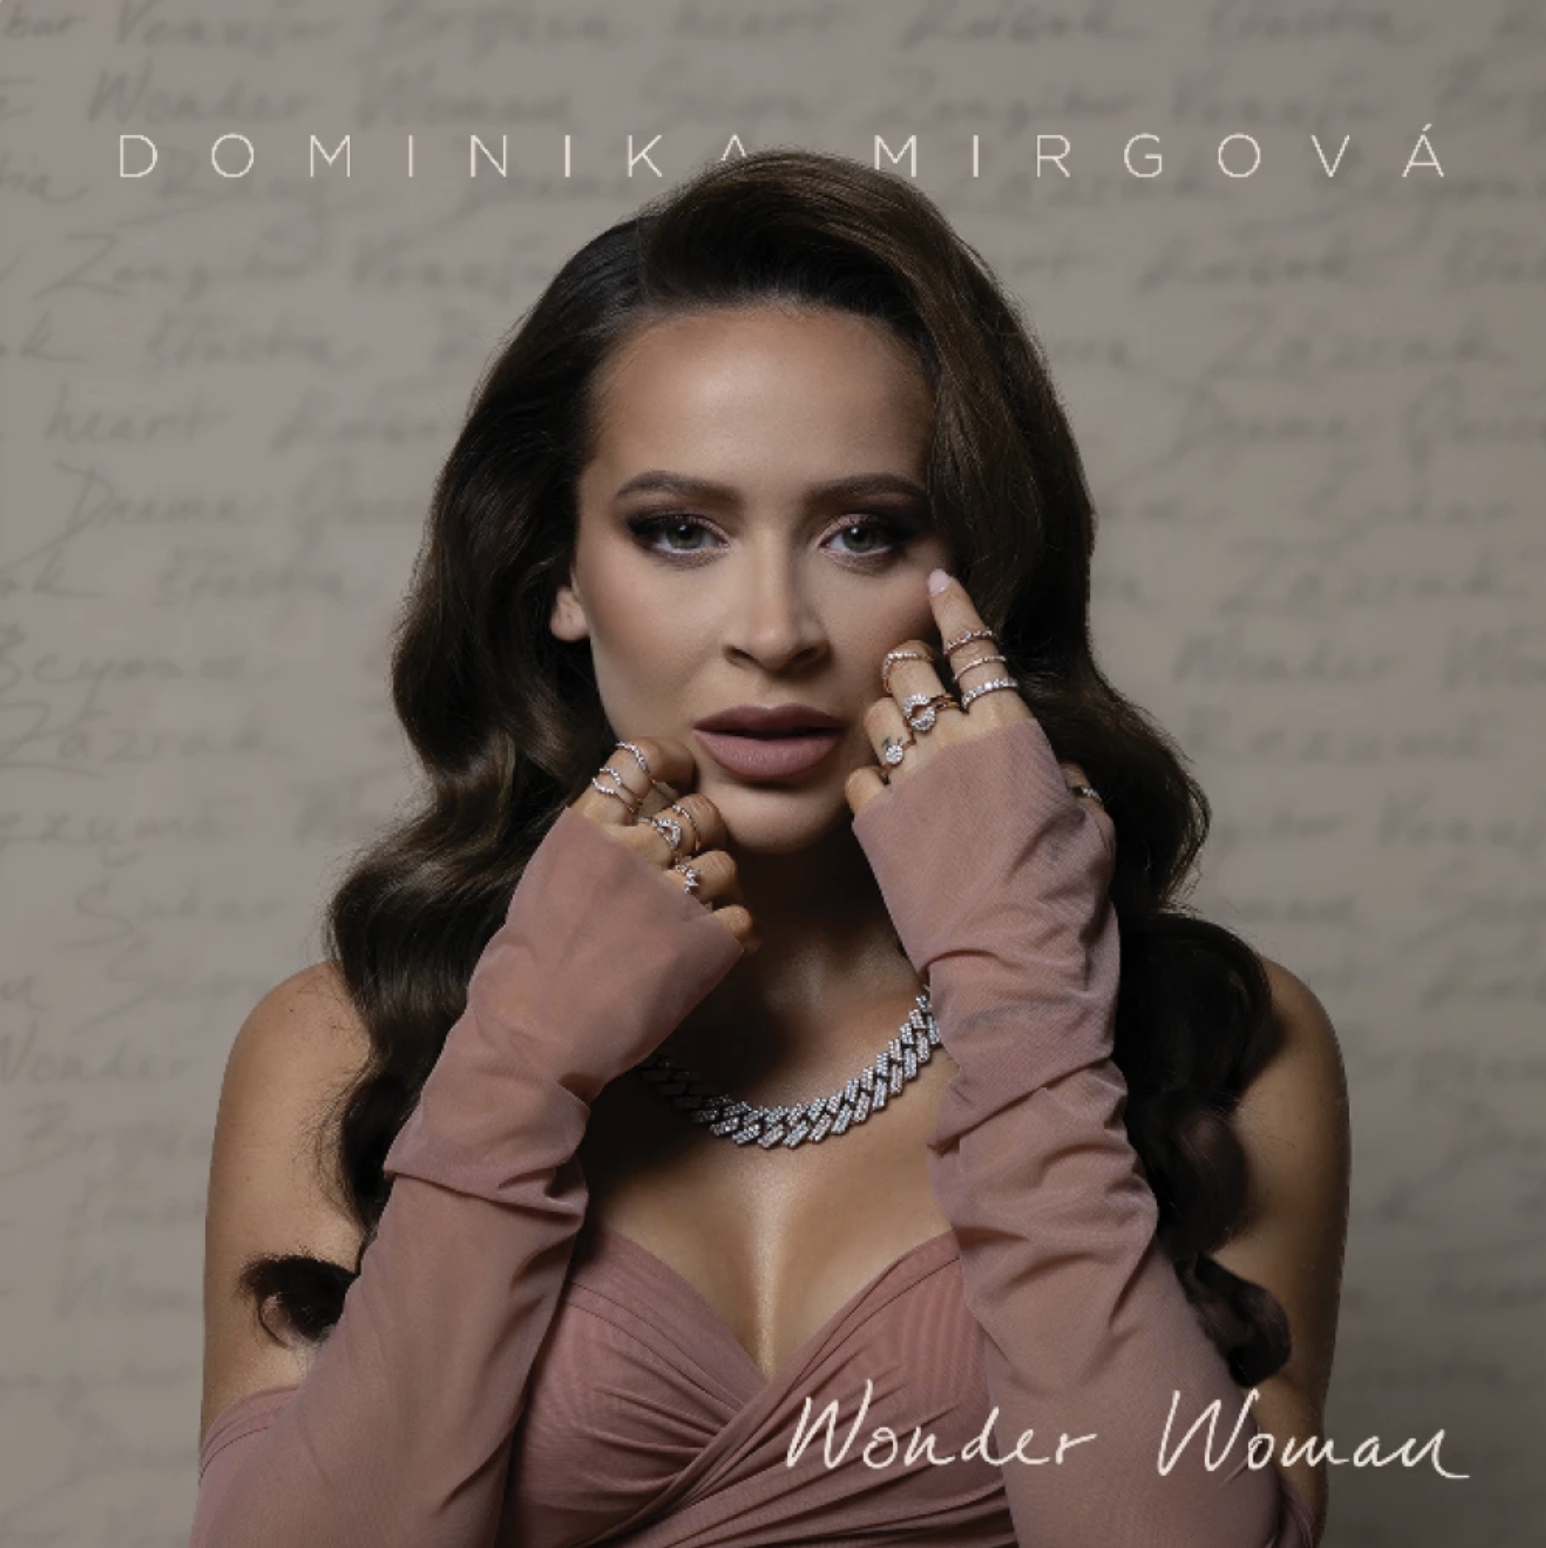 Dominika Mirgová Wonder Woman cover artwork